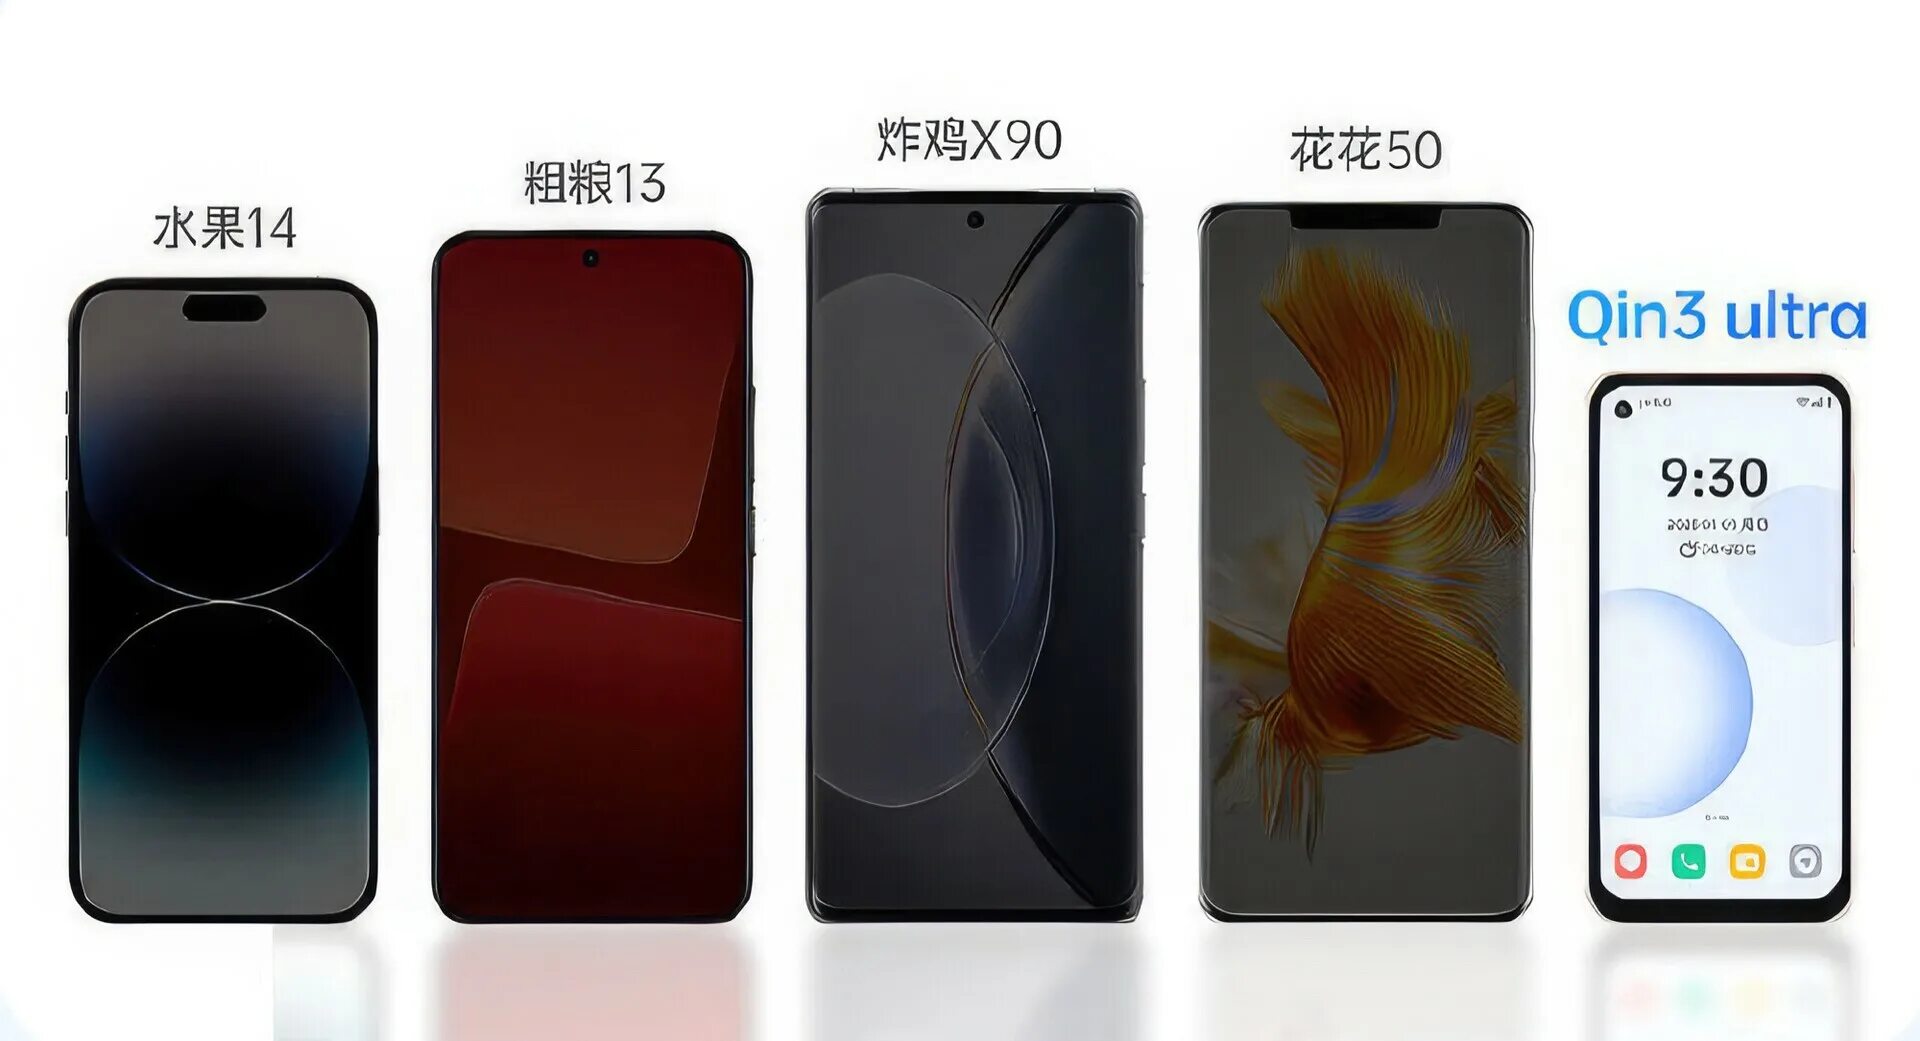 Qin 3 ultra купить. Смартфон qin3 Ultra. Xiaomi Qin 3 Ultra. Qin 3 Pro Ultra. Qin 3 Ultra характеристики.